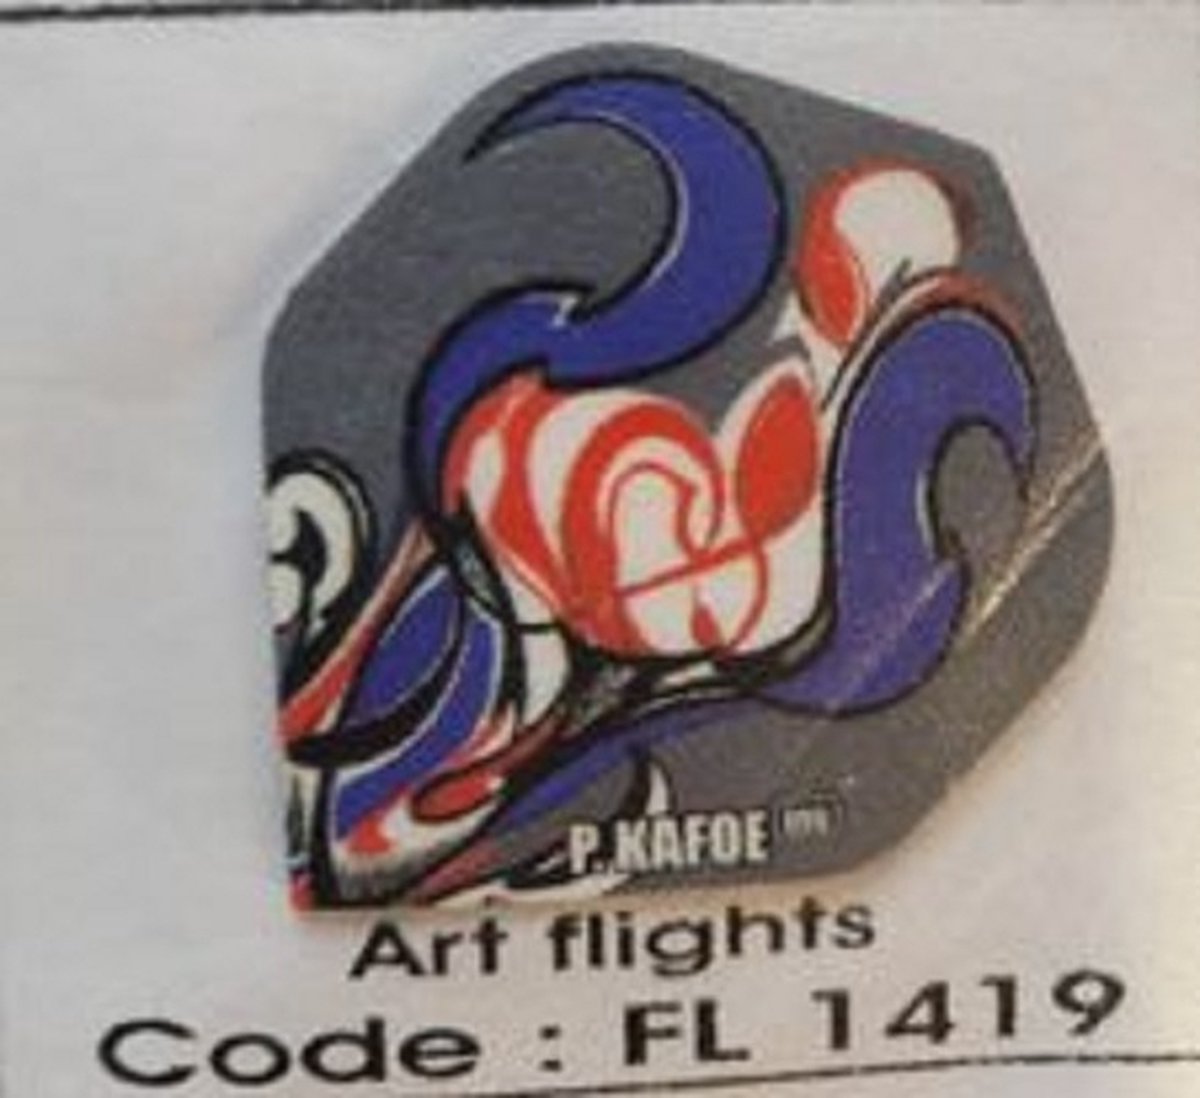 Dart Flights - 10 sets (30 stuks) - 75 micron - Art Flights